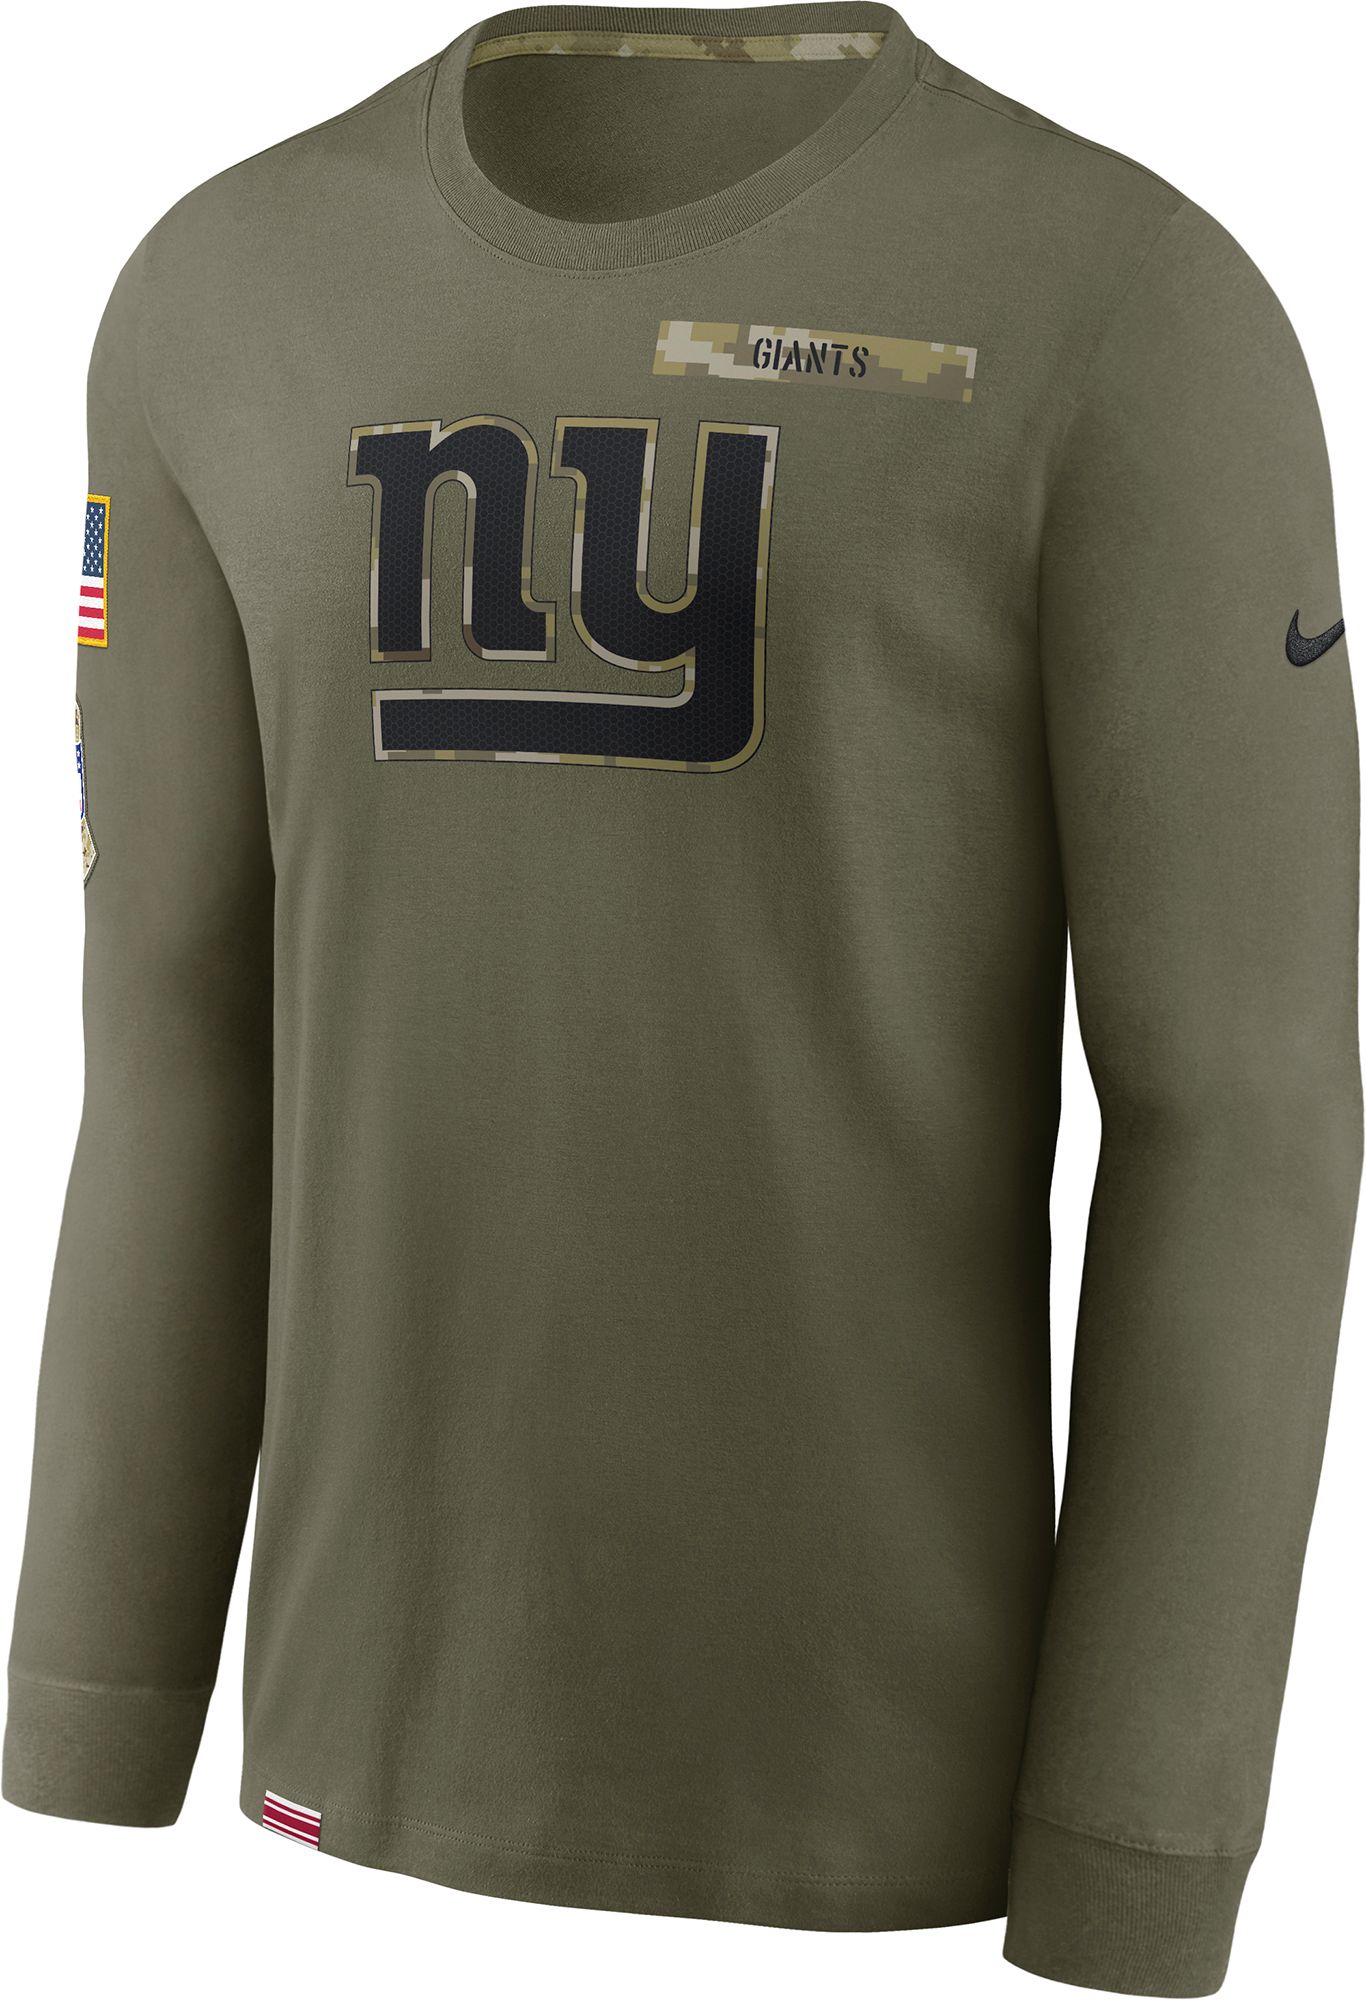 long sleeve new york giants shirt